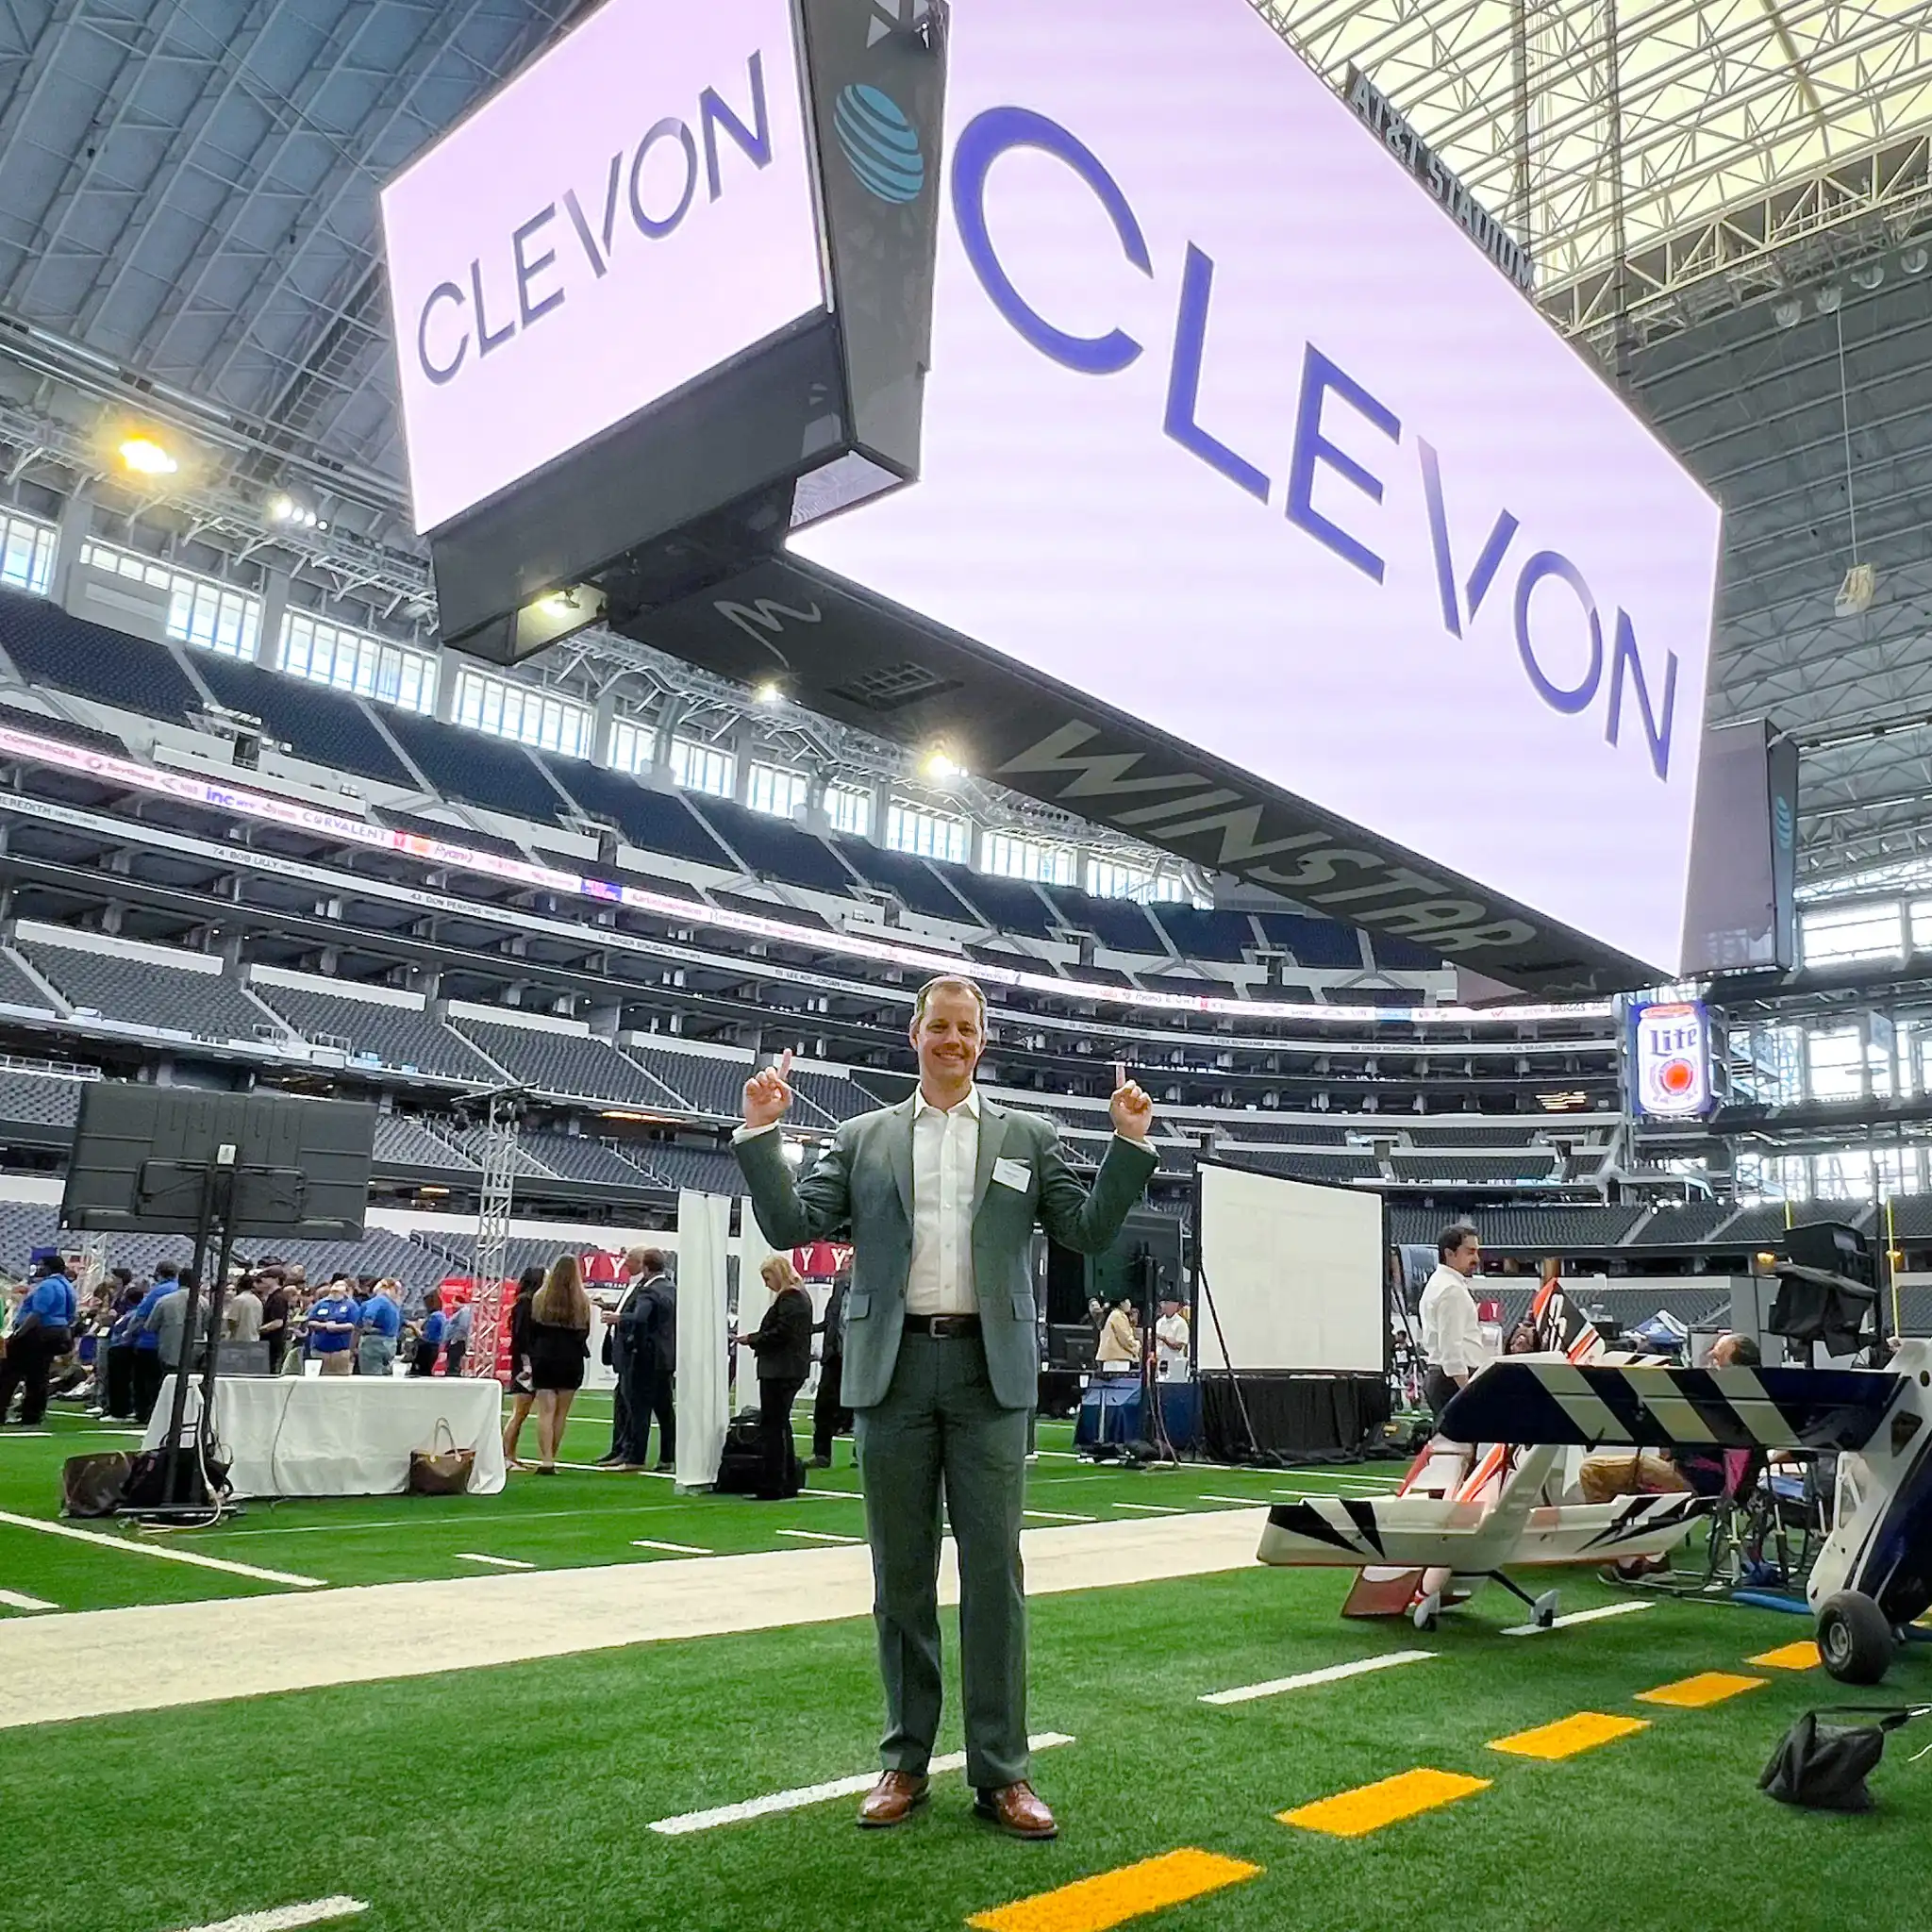 Clevon COO Meelis Anton at the ATT stadium posing with the largest Clevon logo